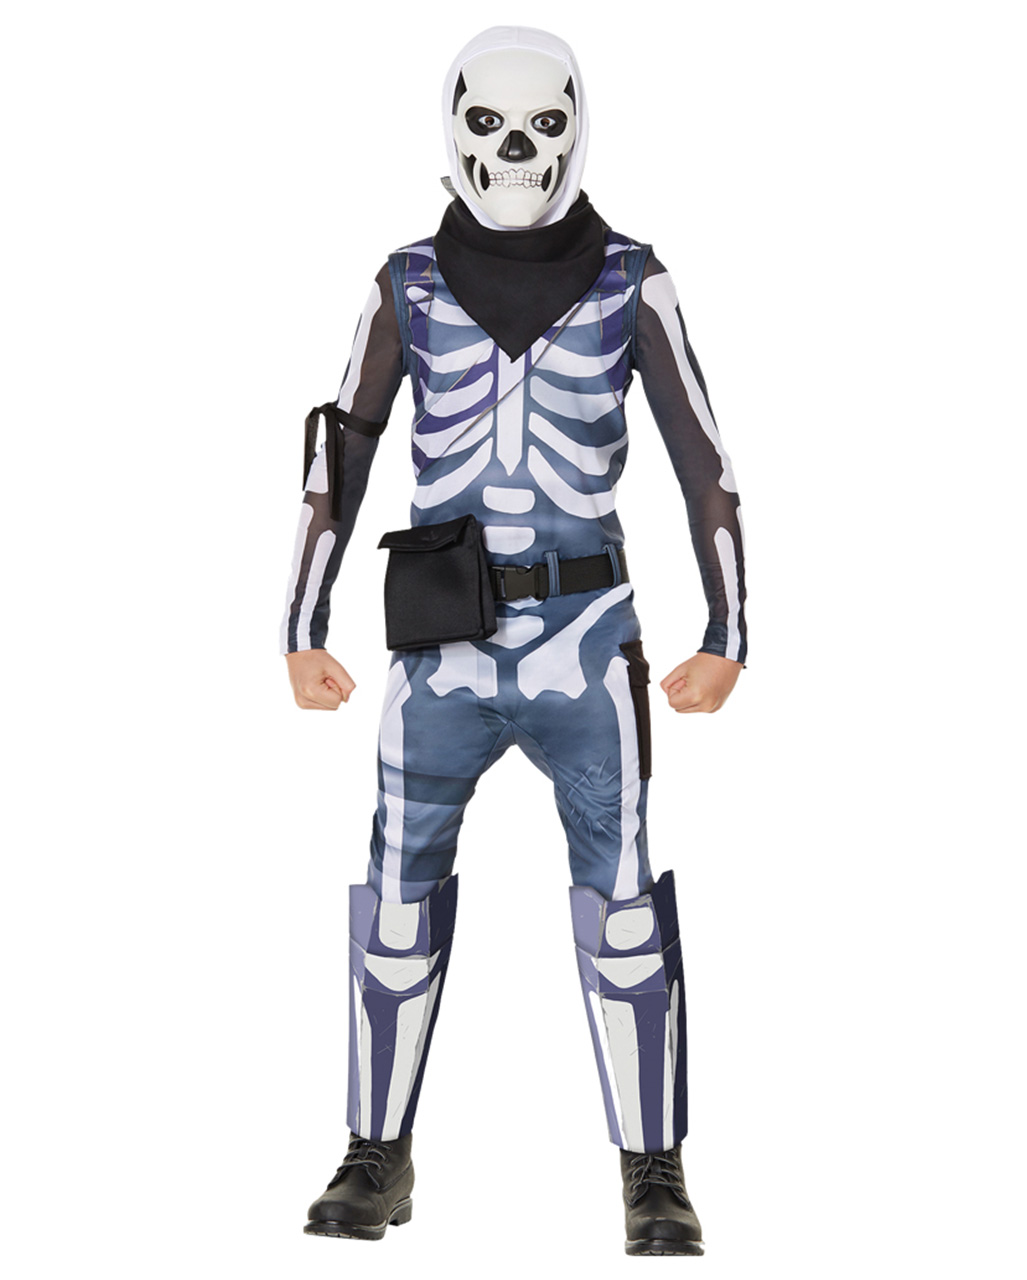 How To Get The Skeleton Outfit In Fortnite Fortnite Skull Trooper Child Costume Order Horror Shop Com